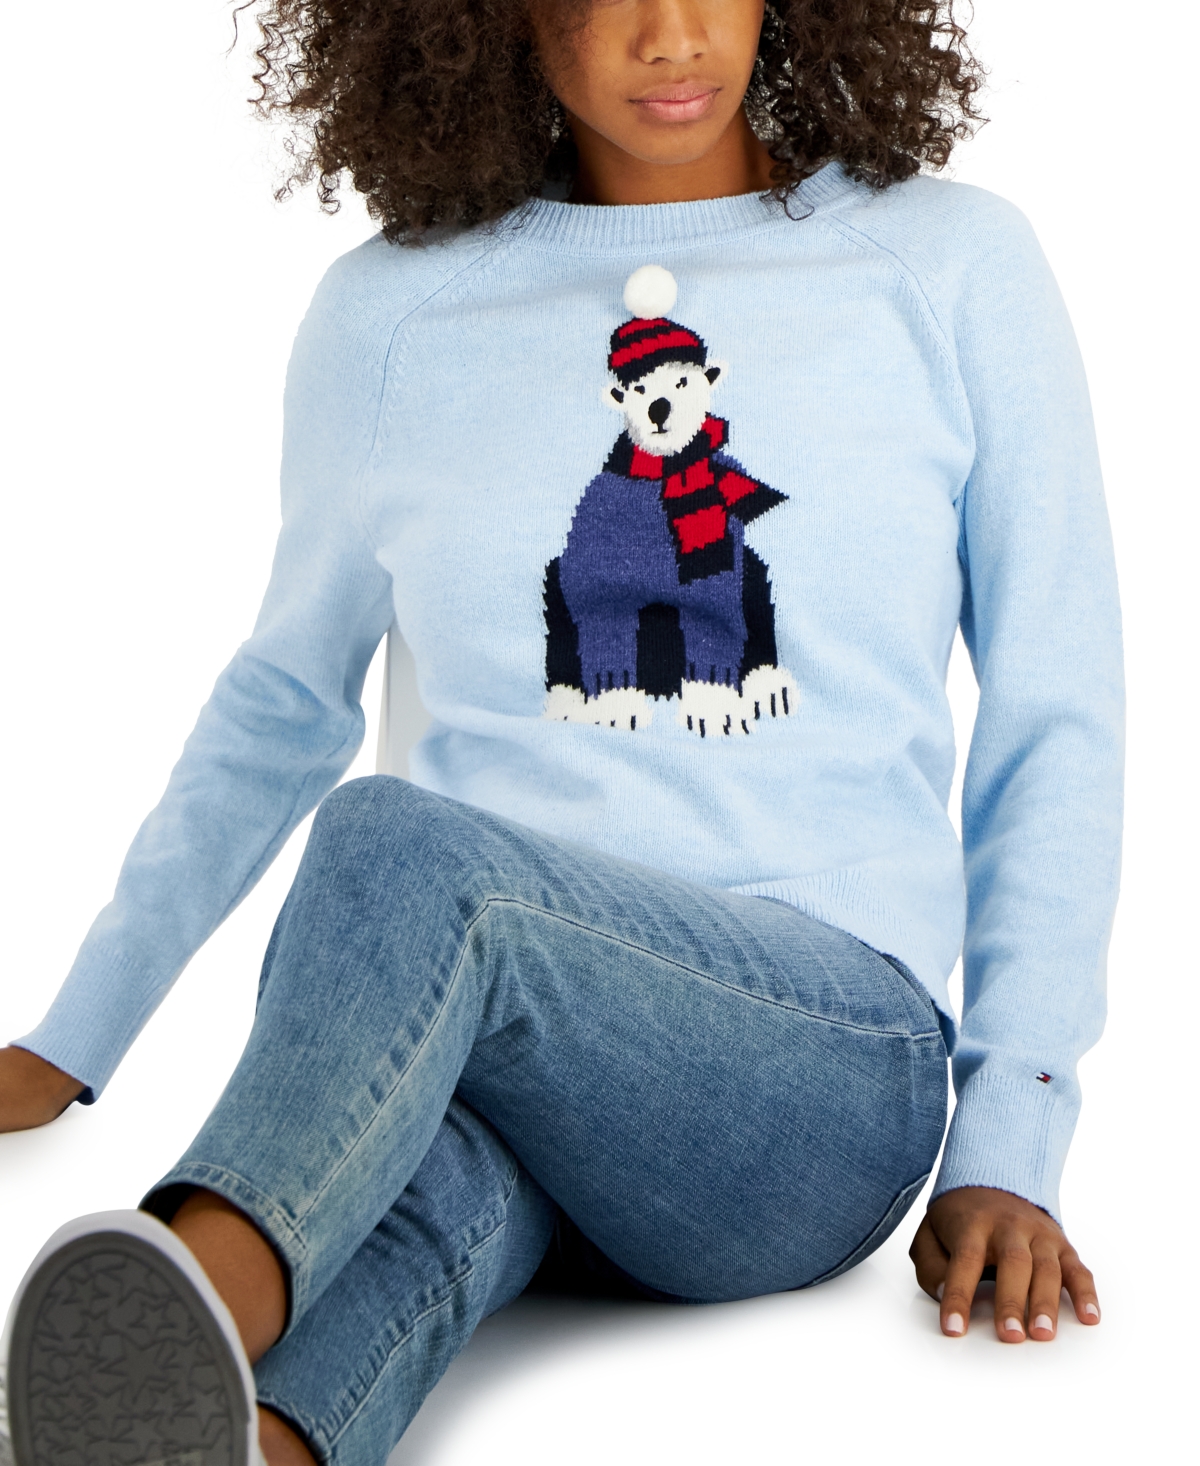 Tommy Hilfiger Women's Polar-Bear-Graphic Sweater